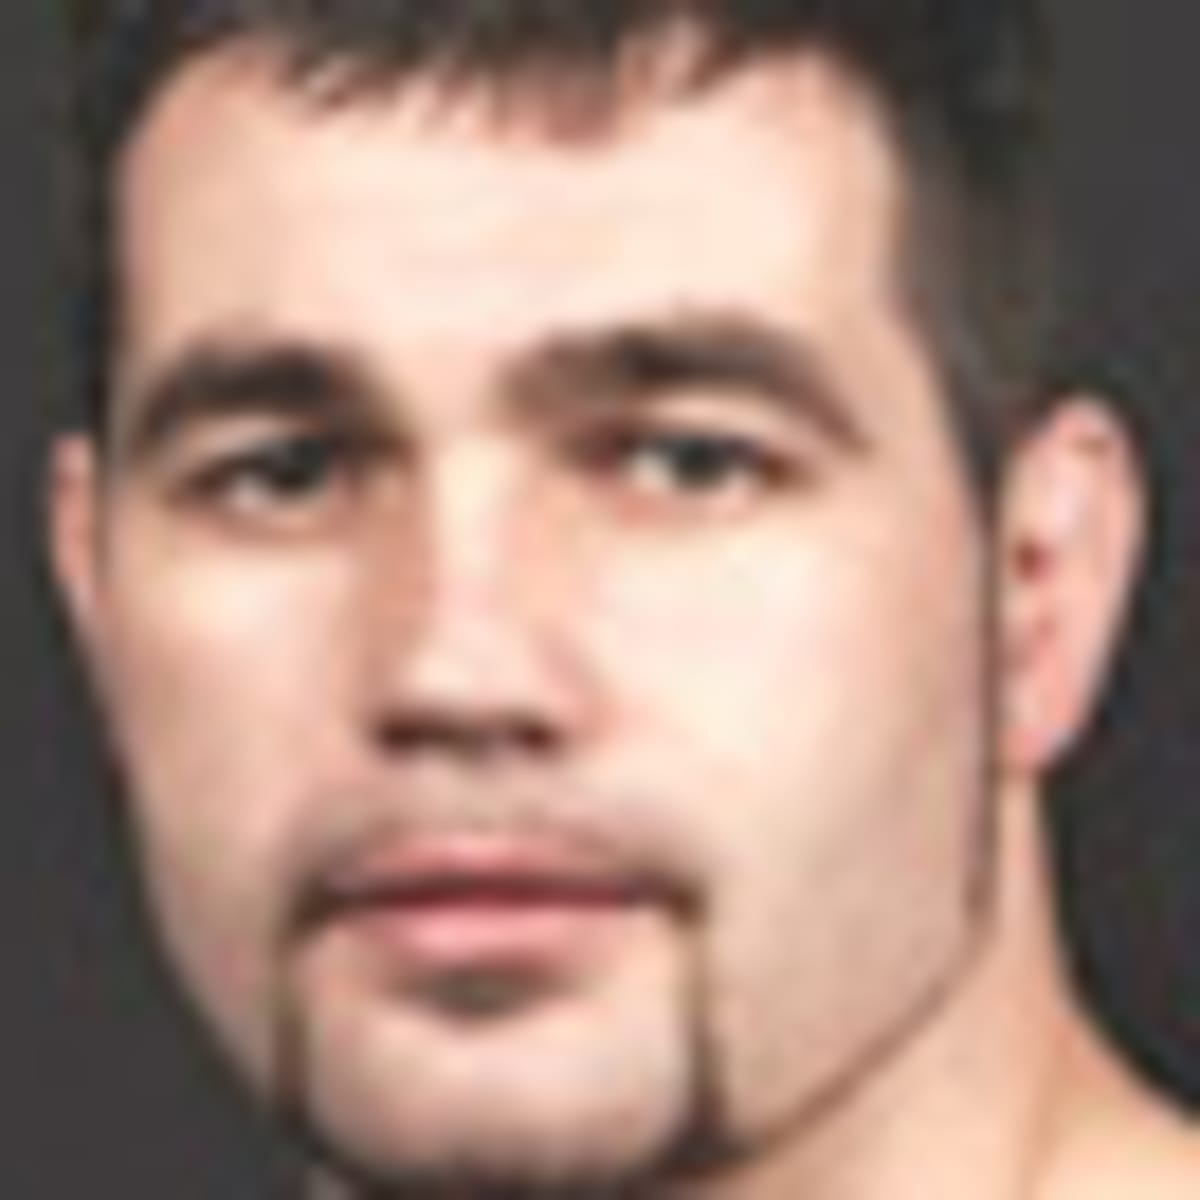 Mark Scanlon vs. James Head, UFC 138, MMA Bout